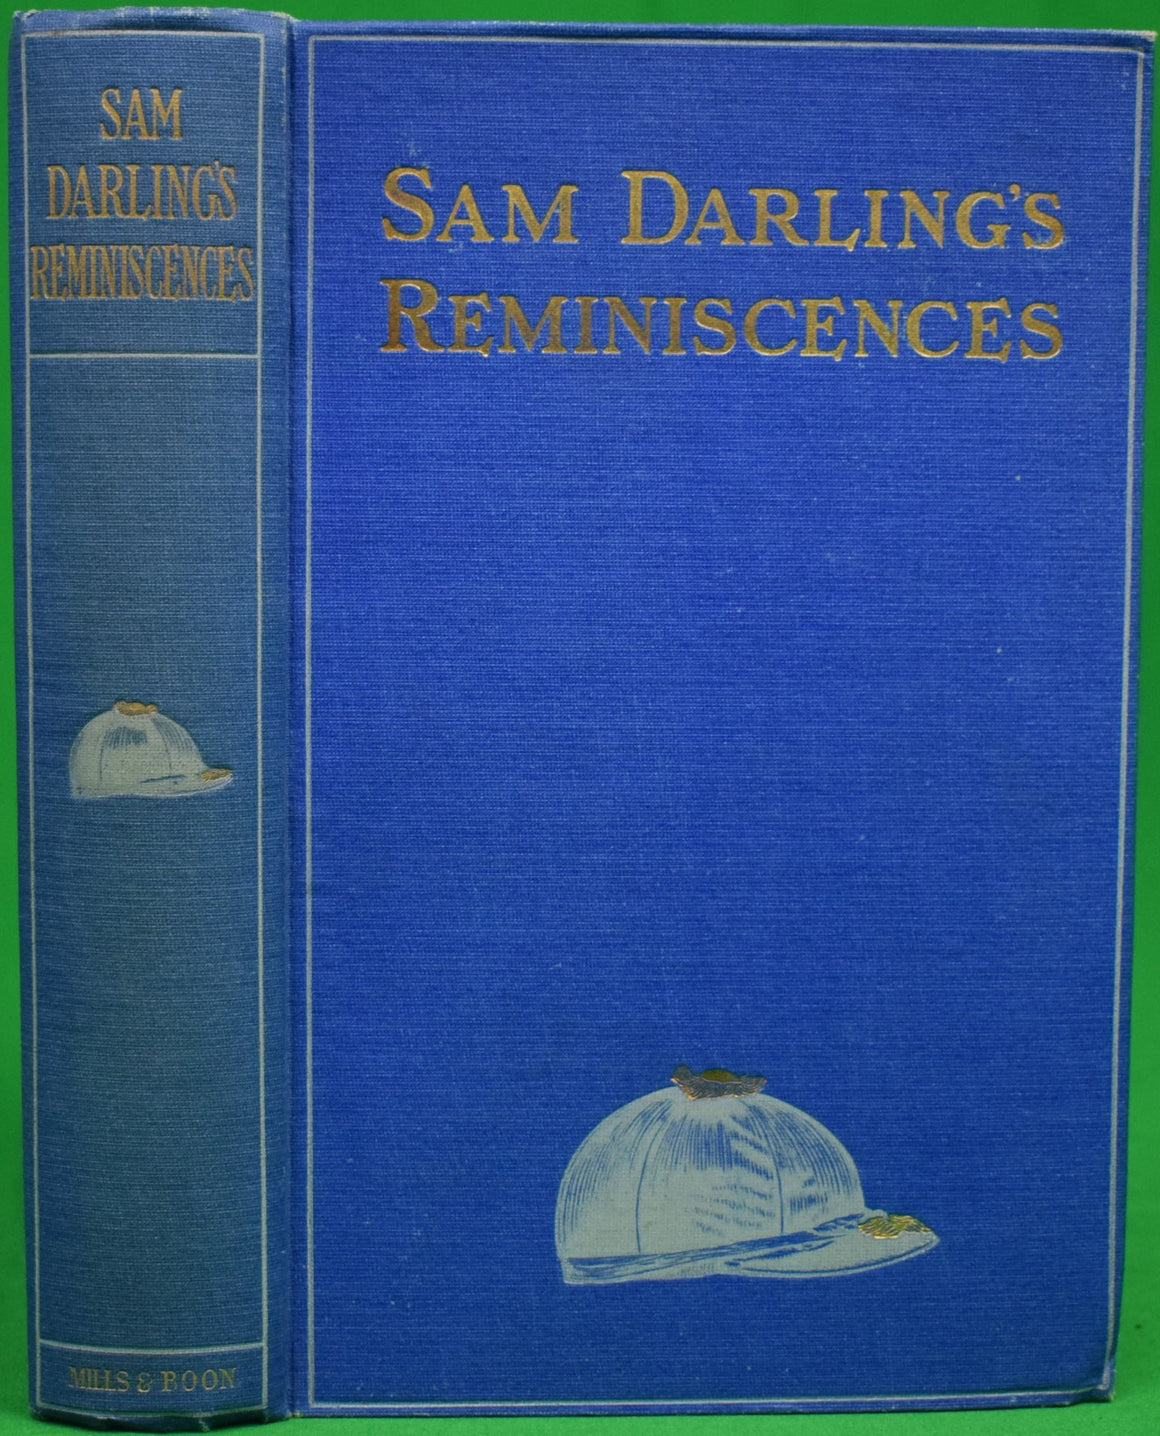 "Sam Darling's Reminiscences" DARLING, Sam